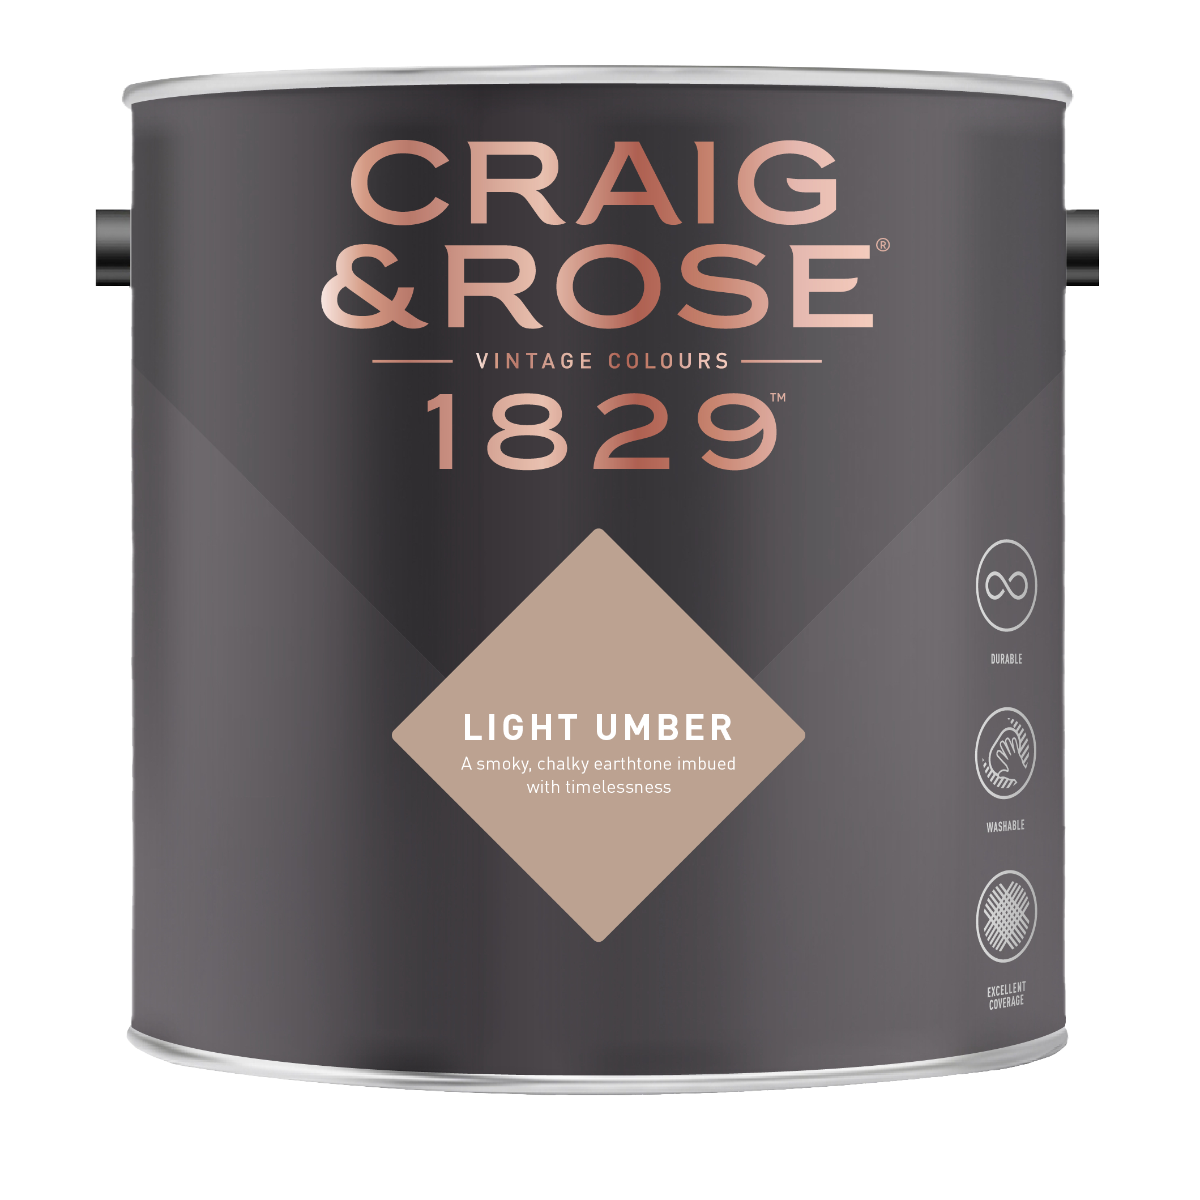 Craig & Rose 1829 Light Umber